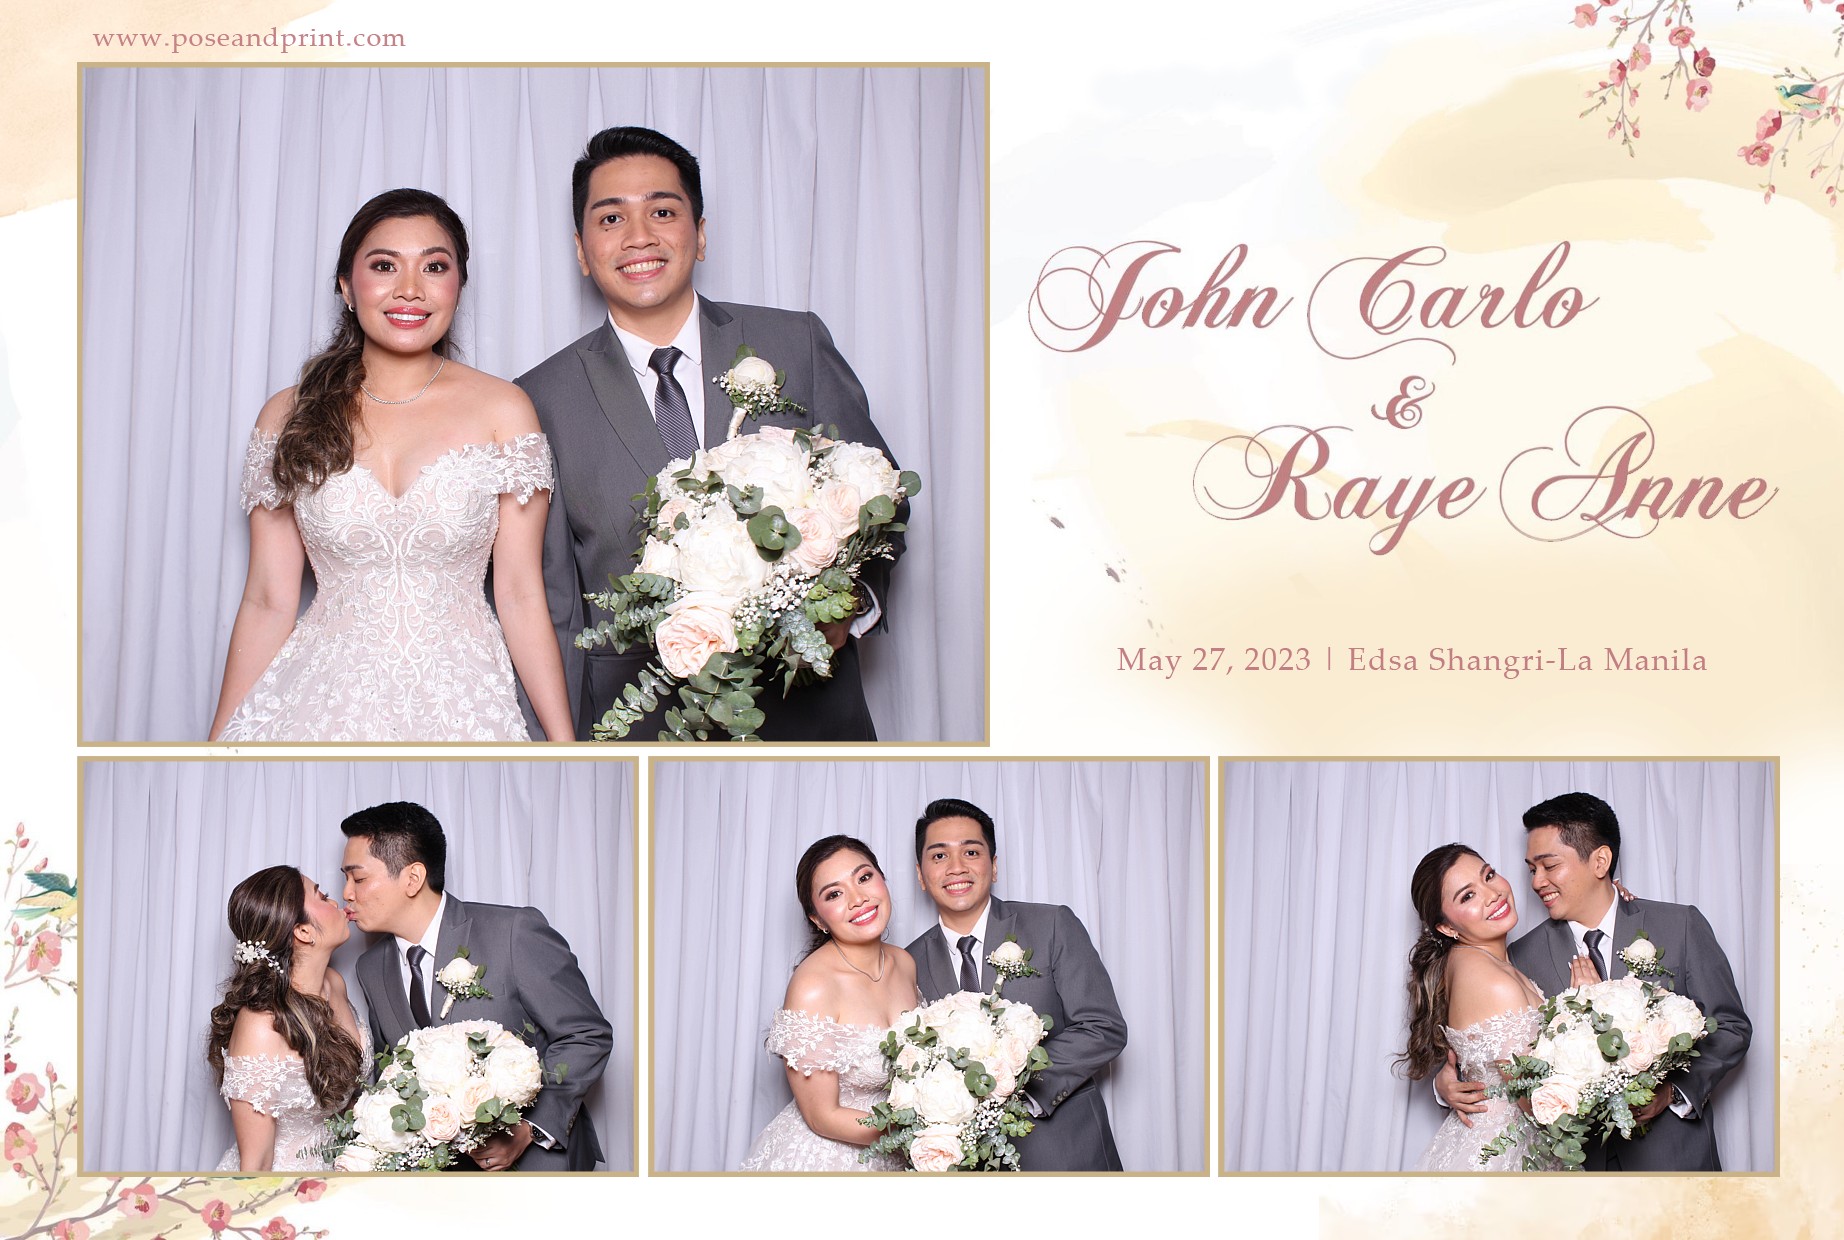 John Carlo and Raye Anne’s Wedding